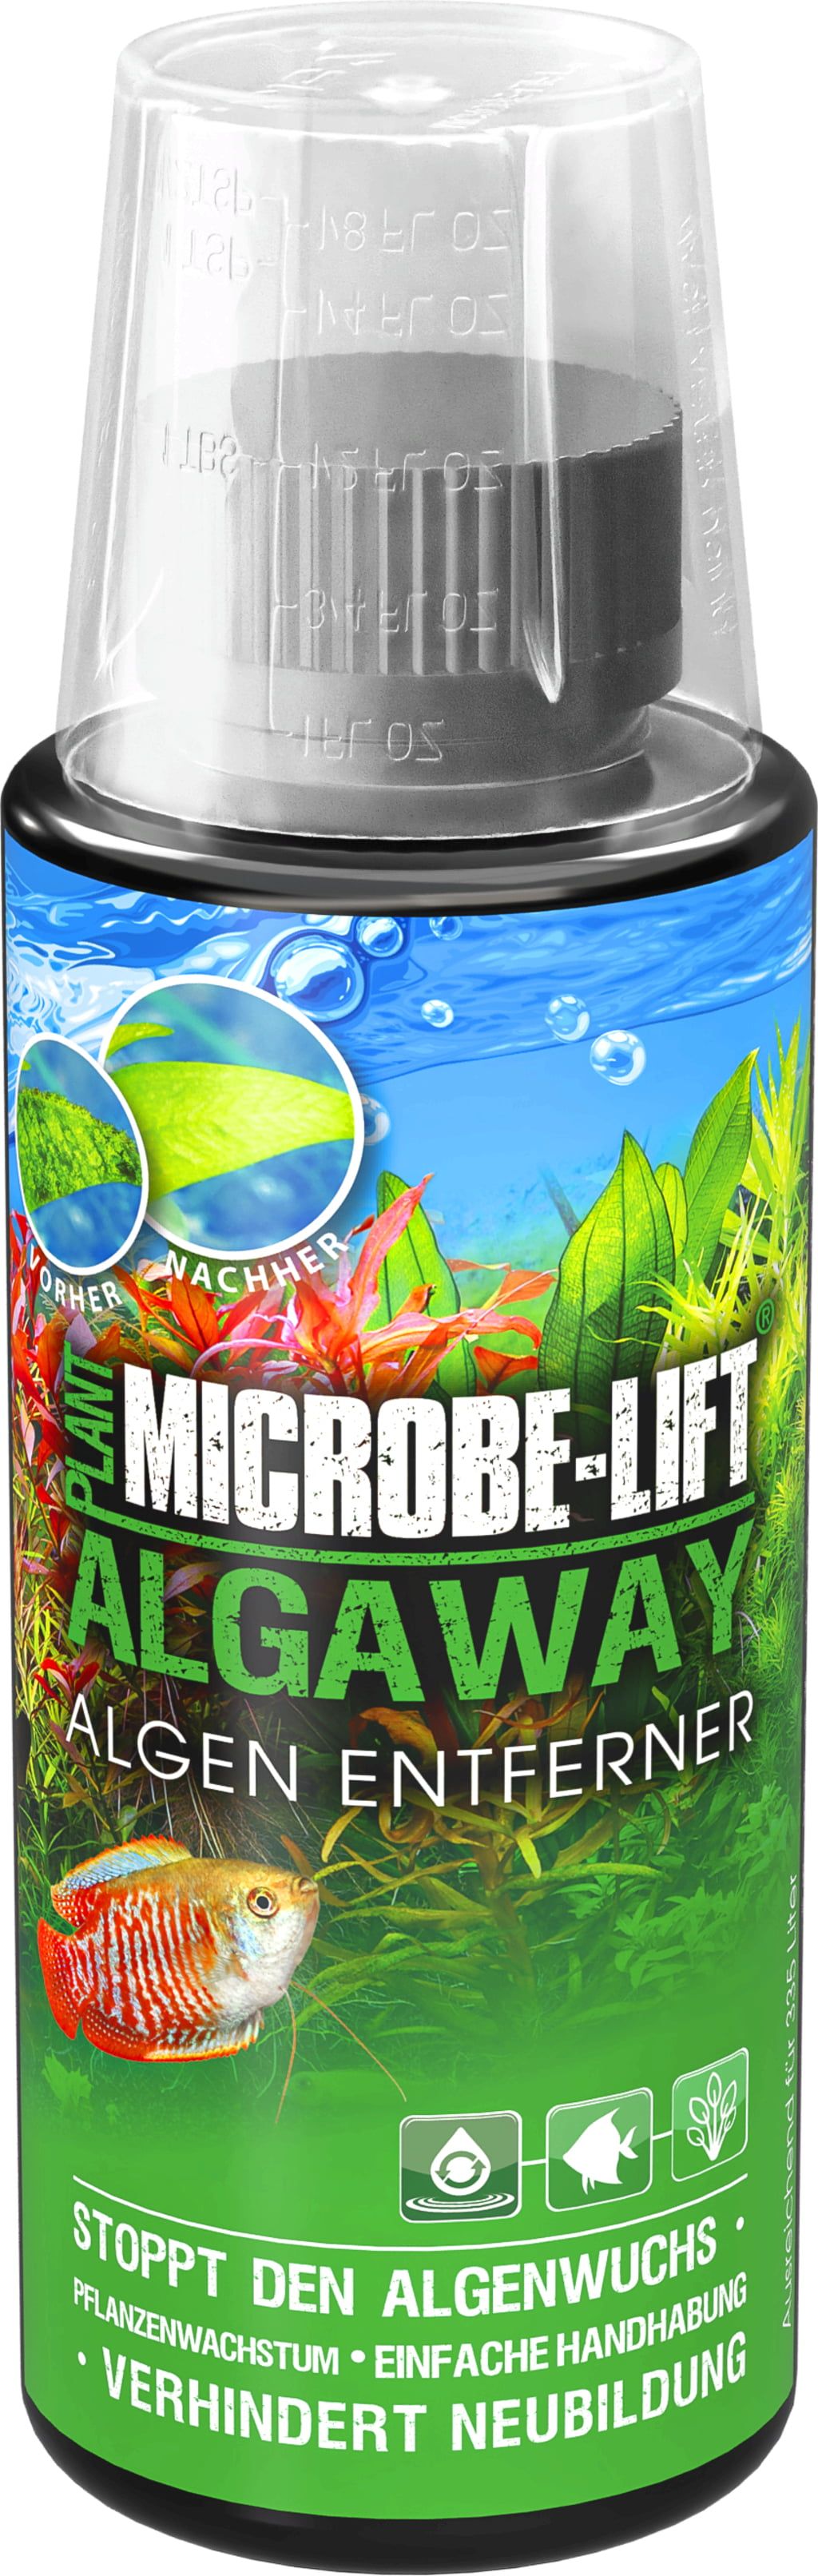 Microbe-Lift Algaway - Olibetta Online Shop